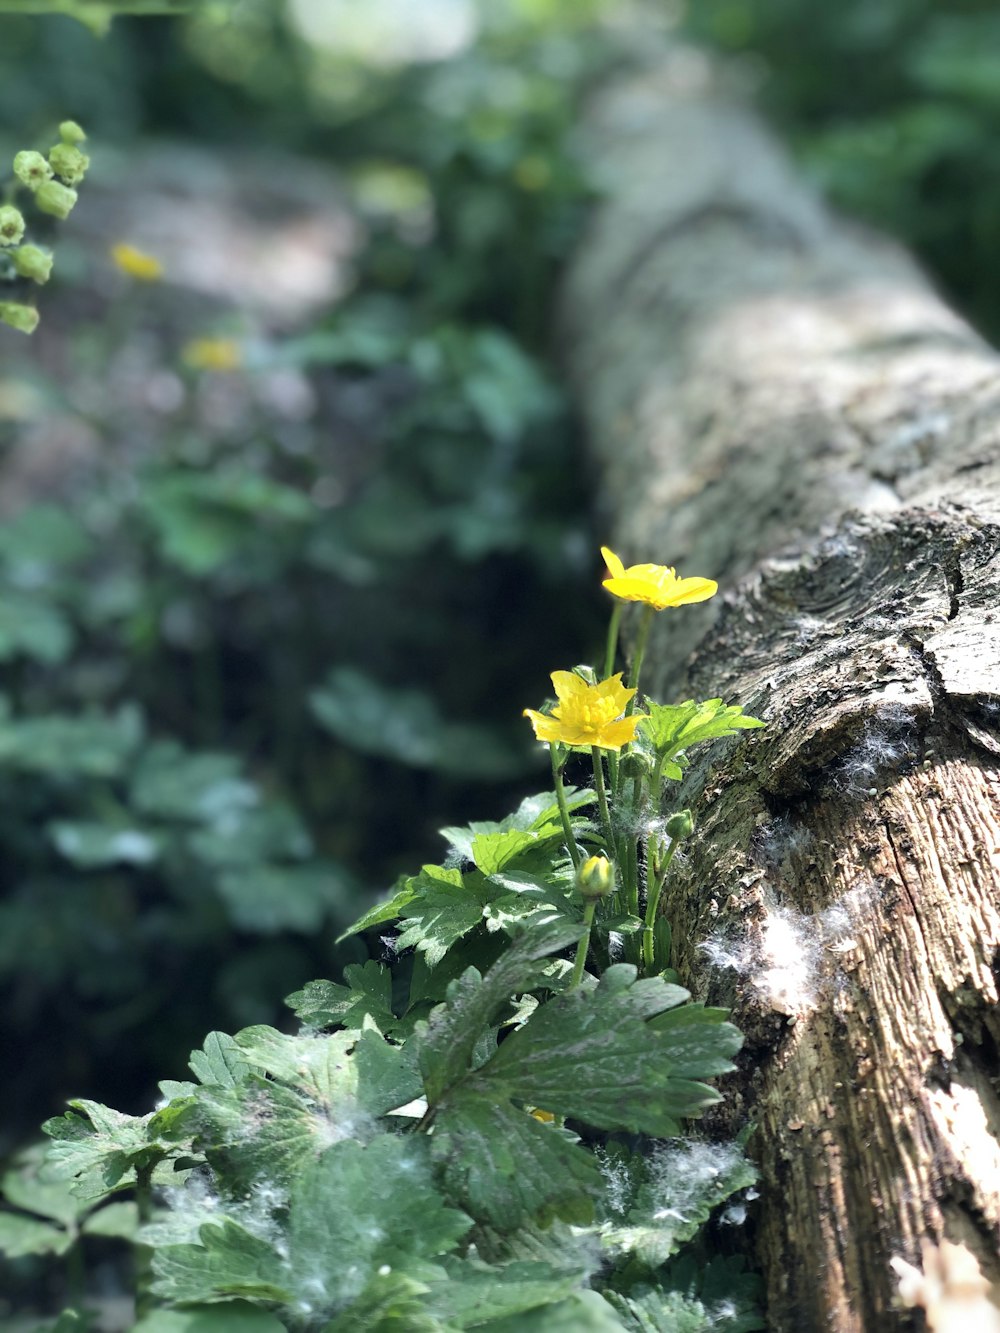 yellow-flowering plant grew beside wood log